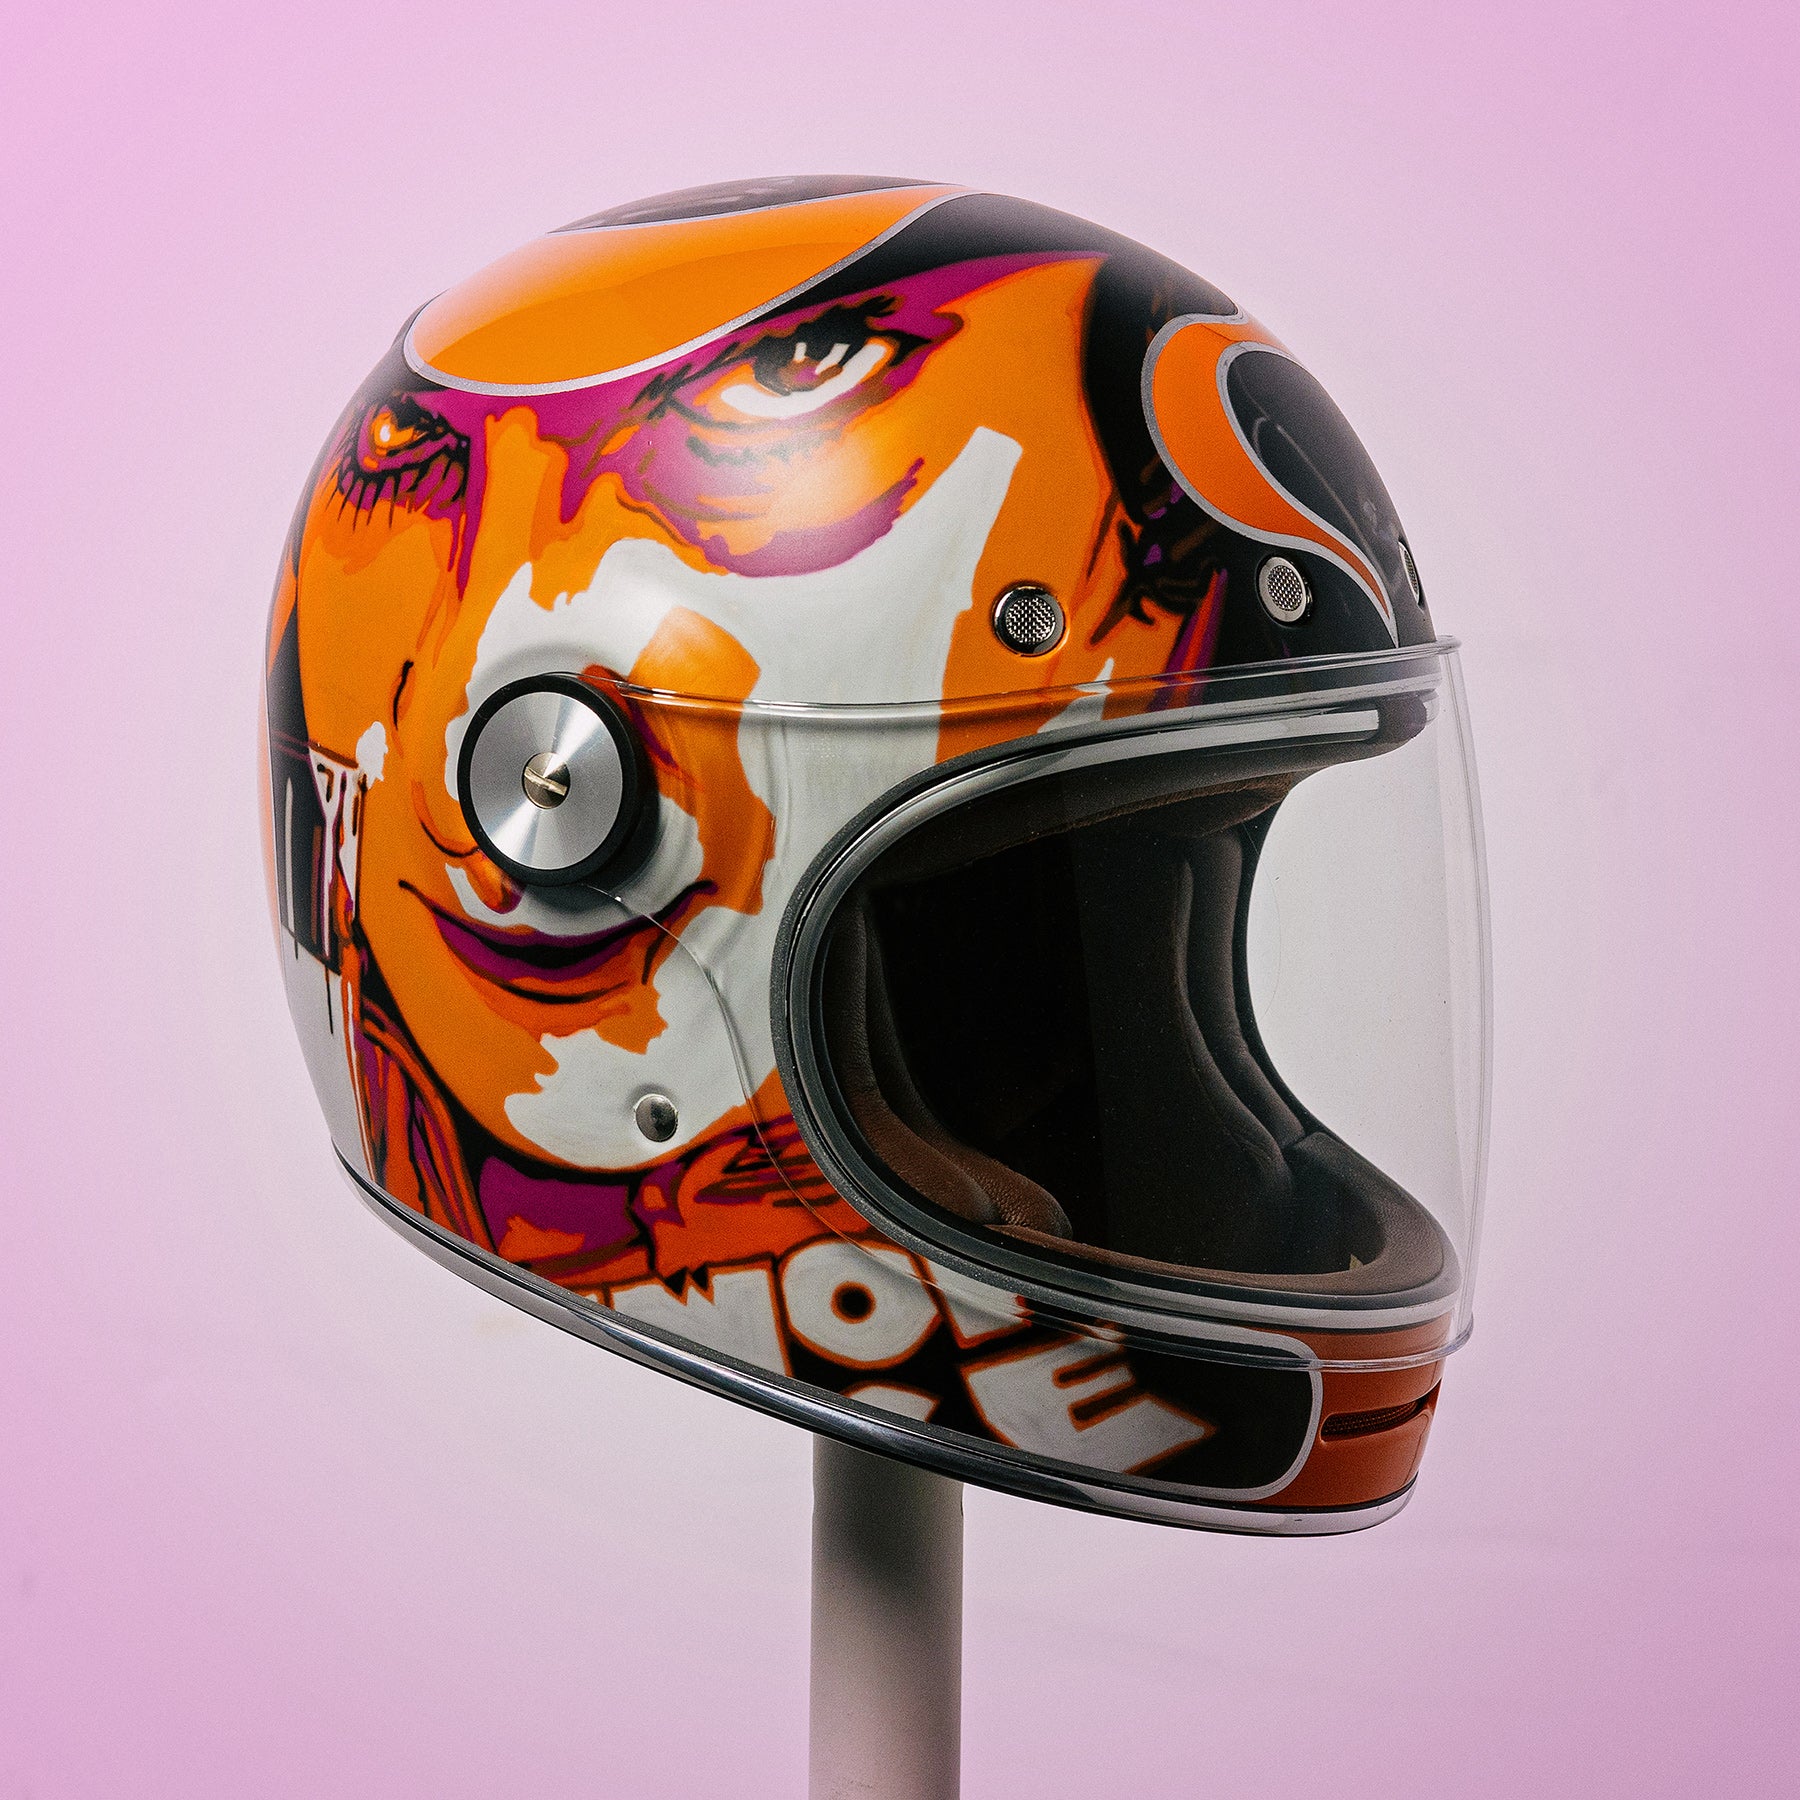 Trippy Ten helmet art show Pittsburgh Glory Daze motorcycle show Bell Helmets Steve Gibson